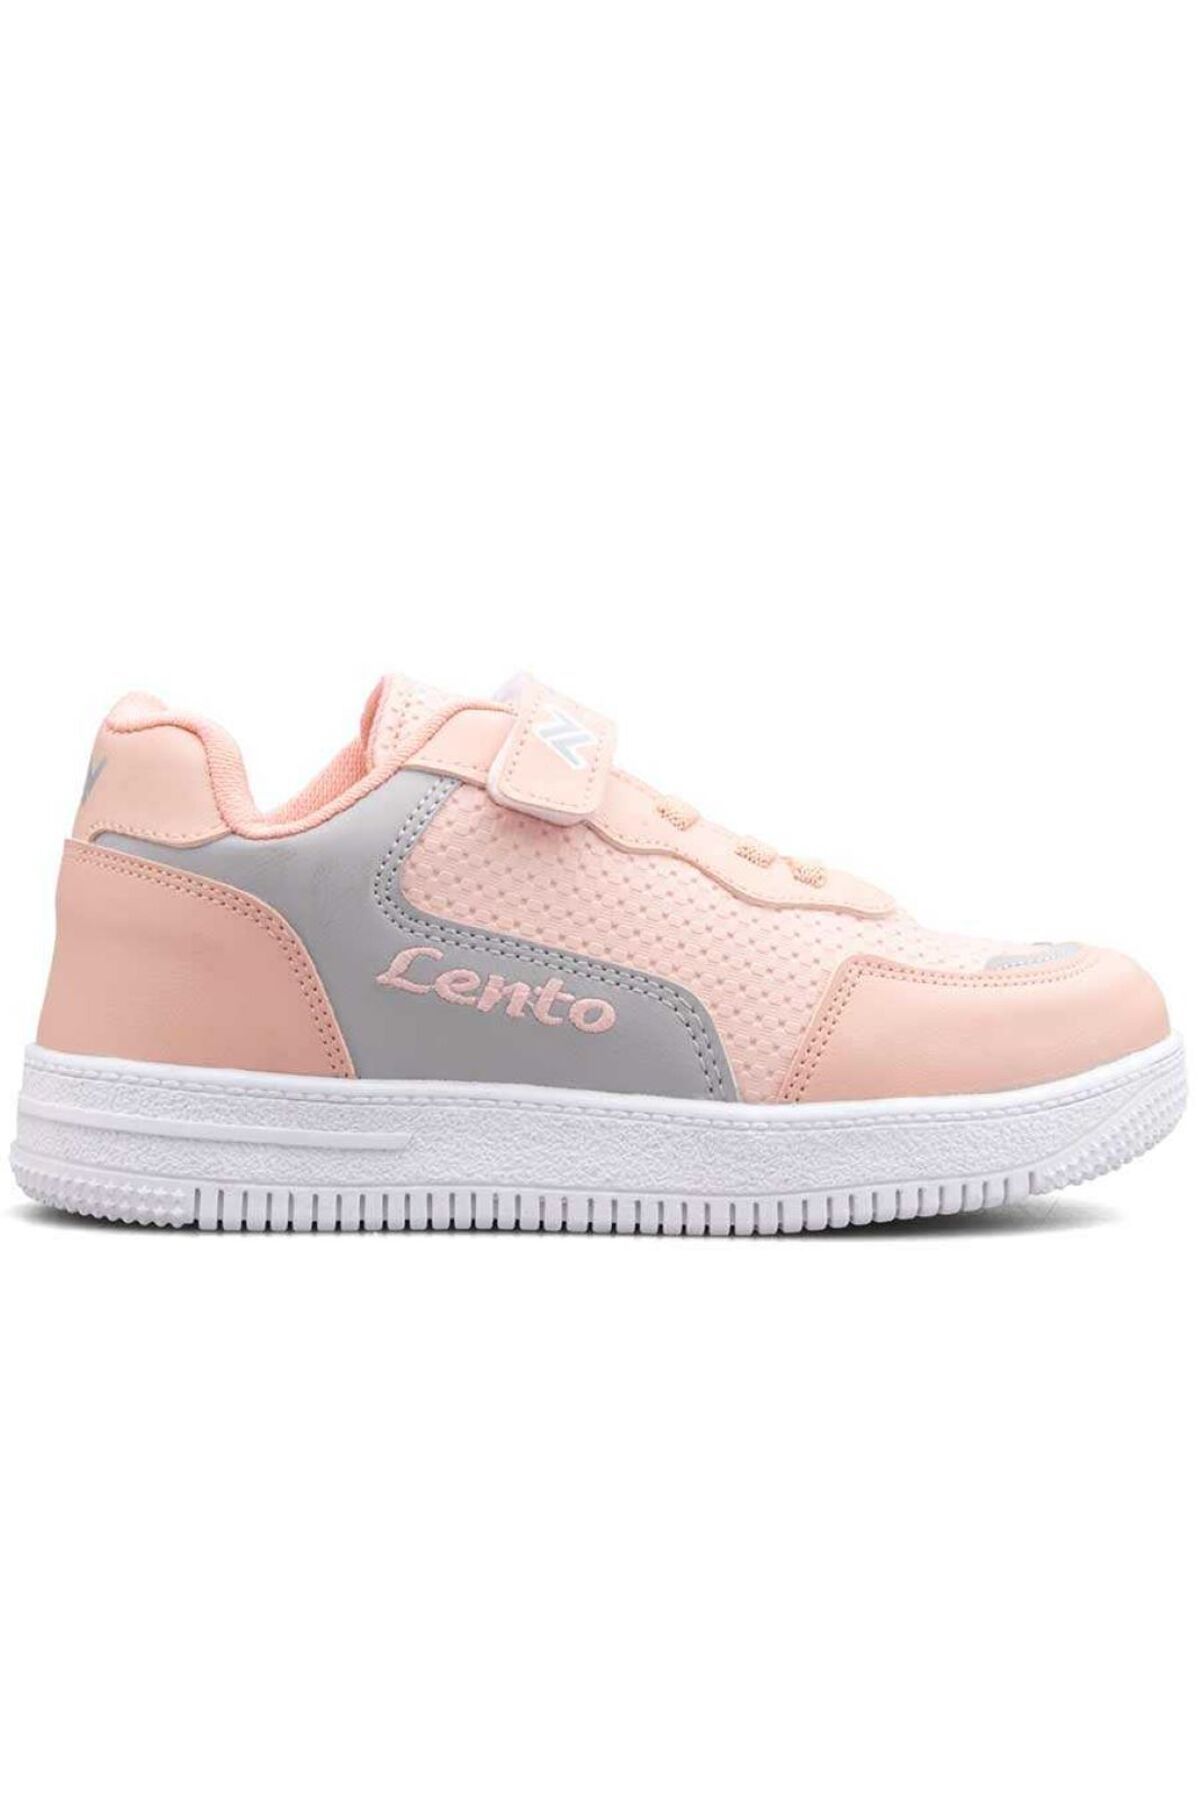 Lento ortopedik rahat kız çocuk spor ayakkabı sneaker pudra/buz filet lento a-25